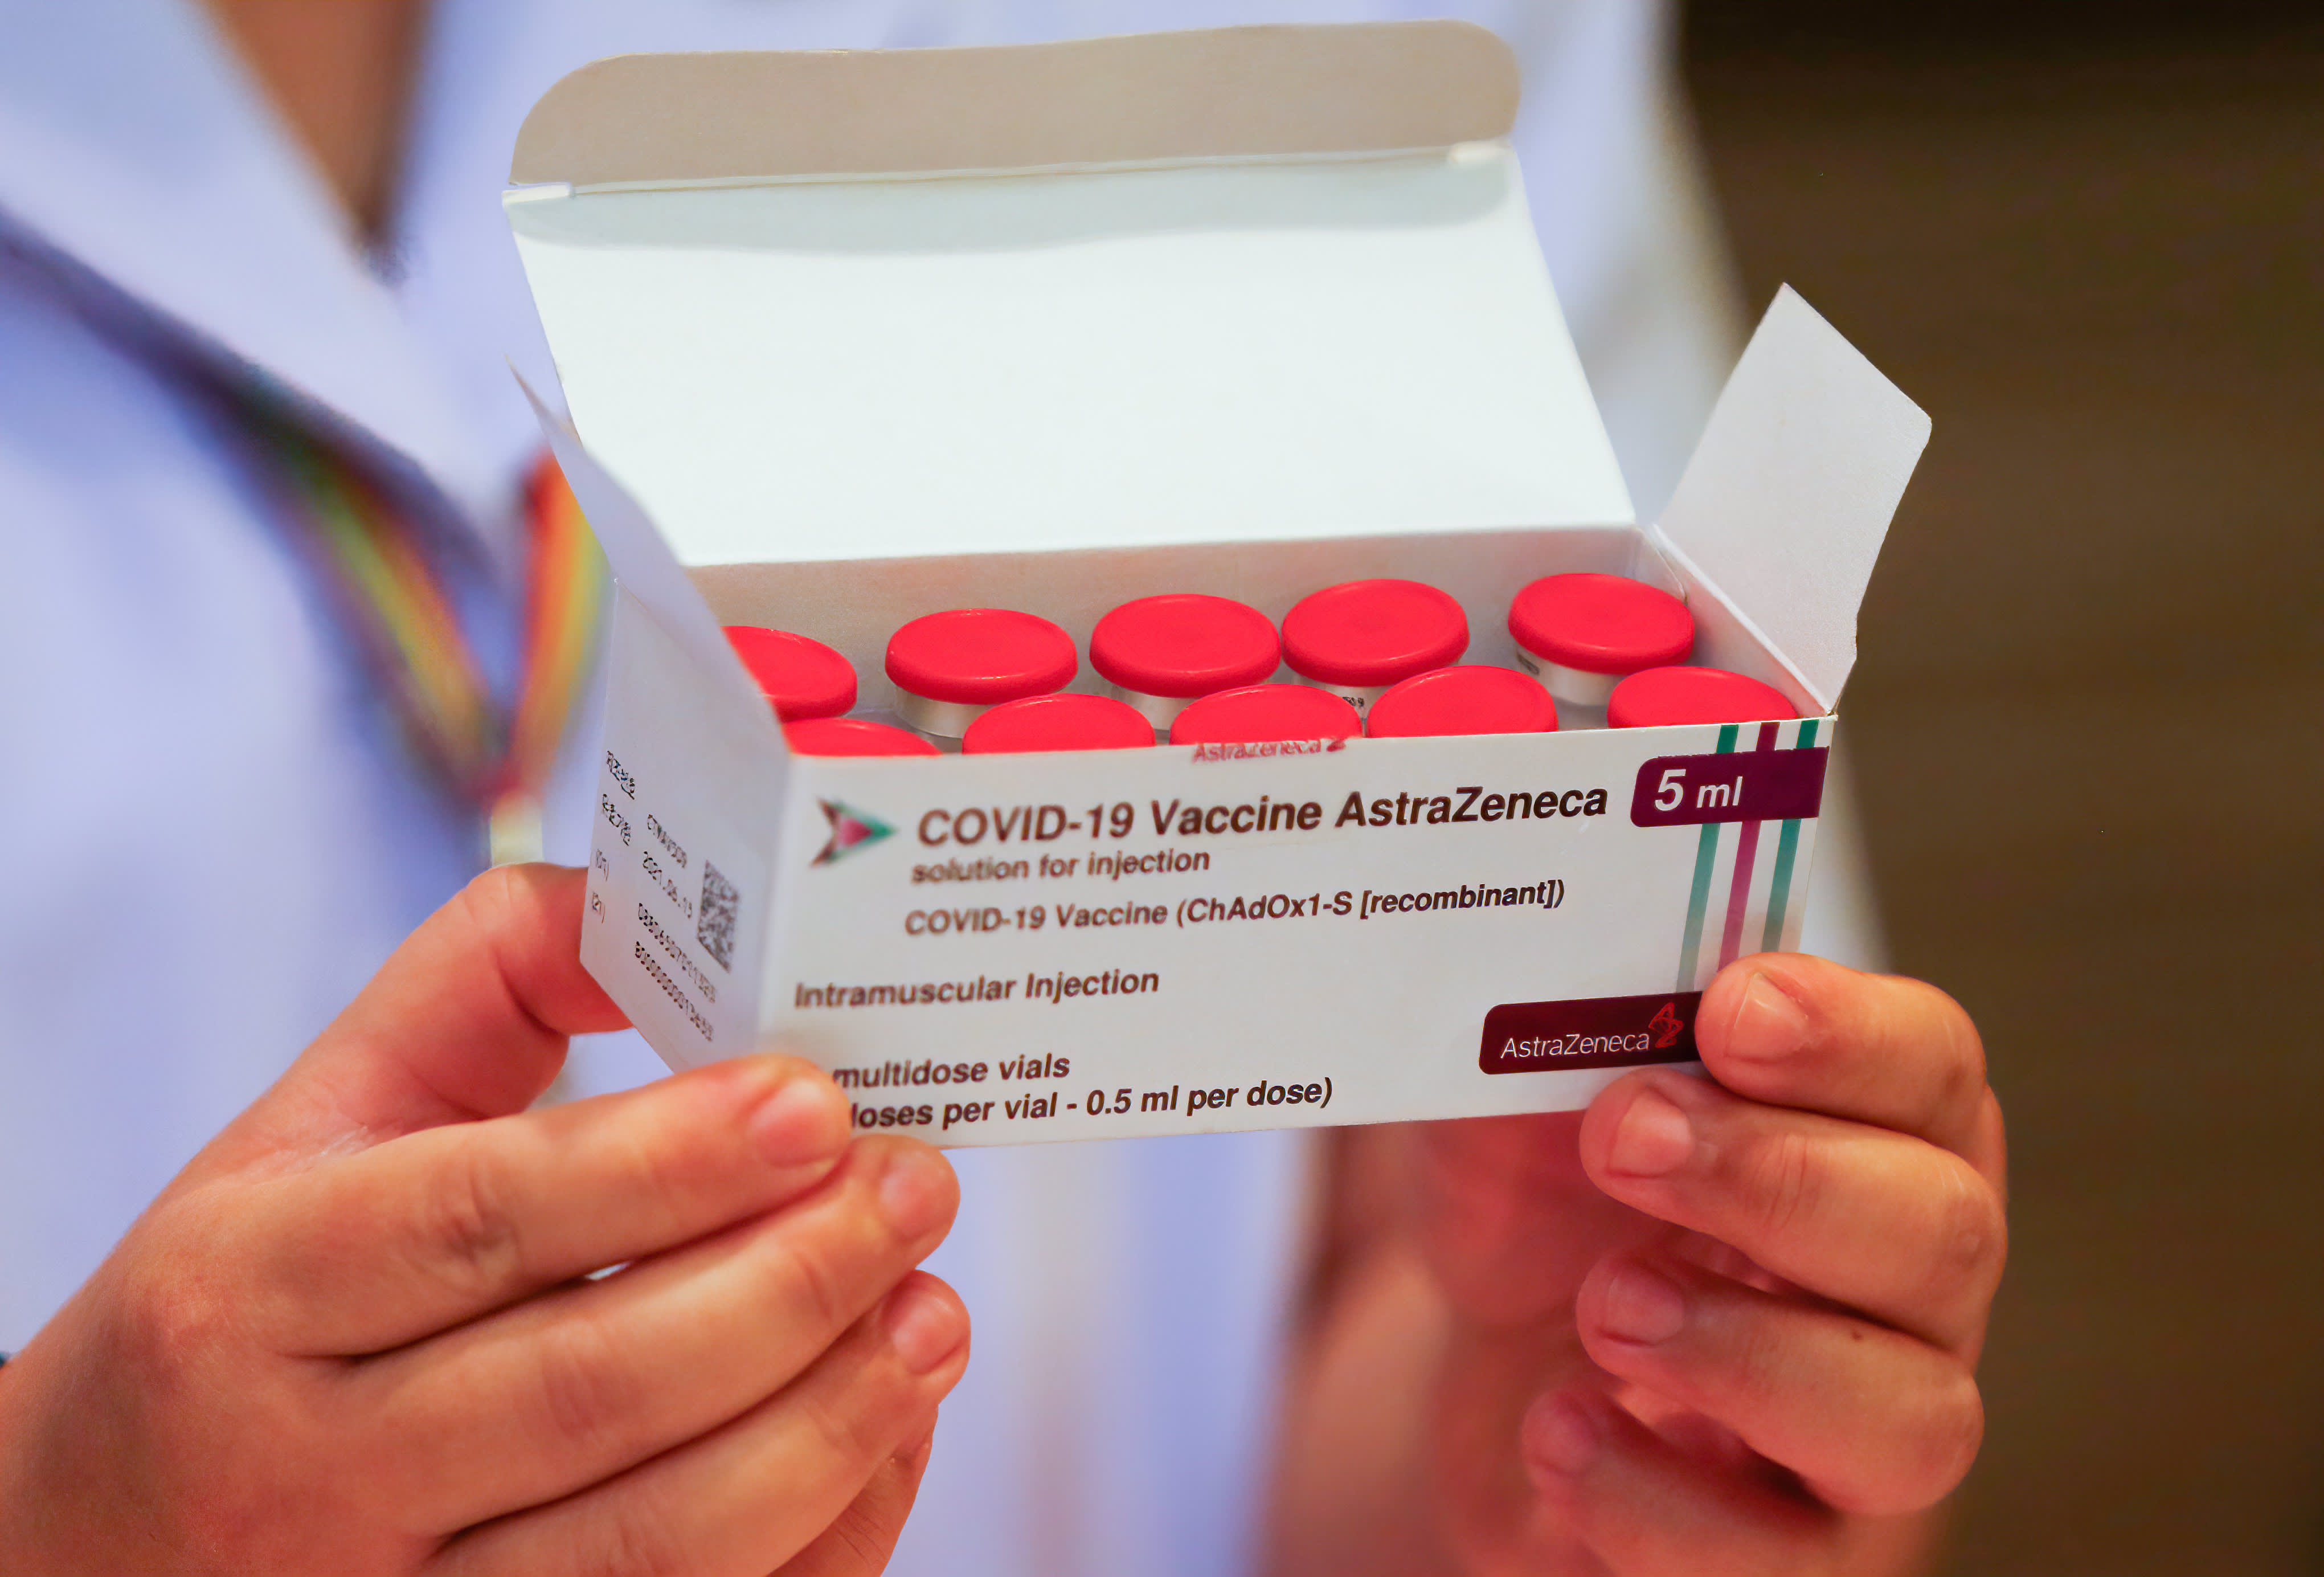 AstraZeneca Covid vaccine will be Thailand's 'principal' shot, says health minister